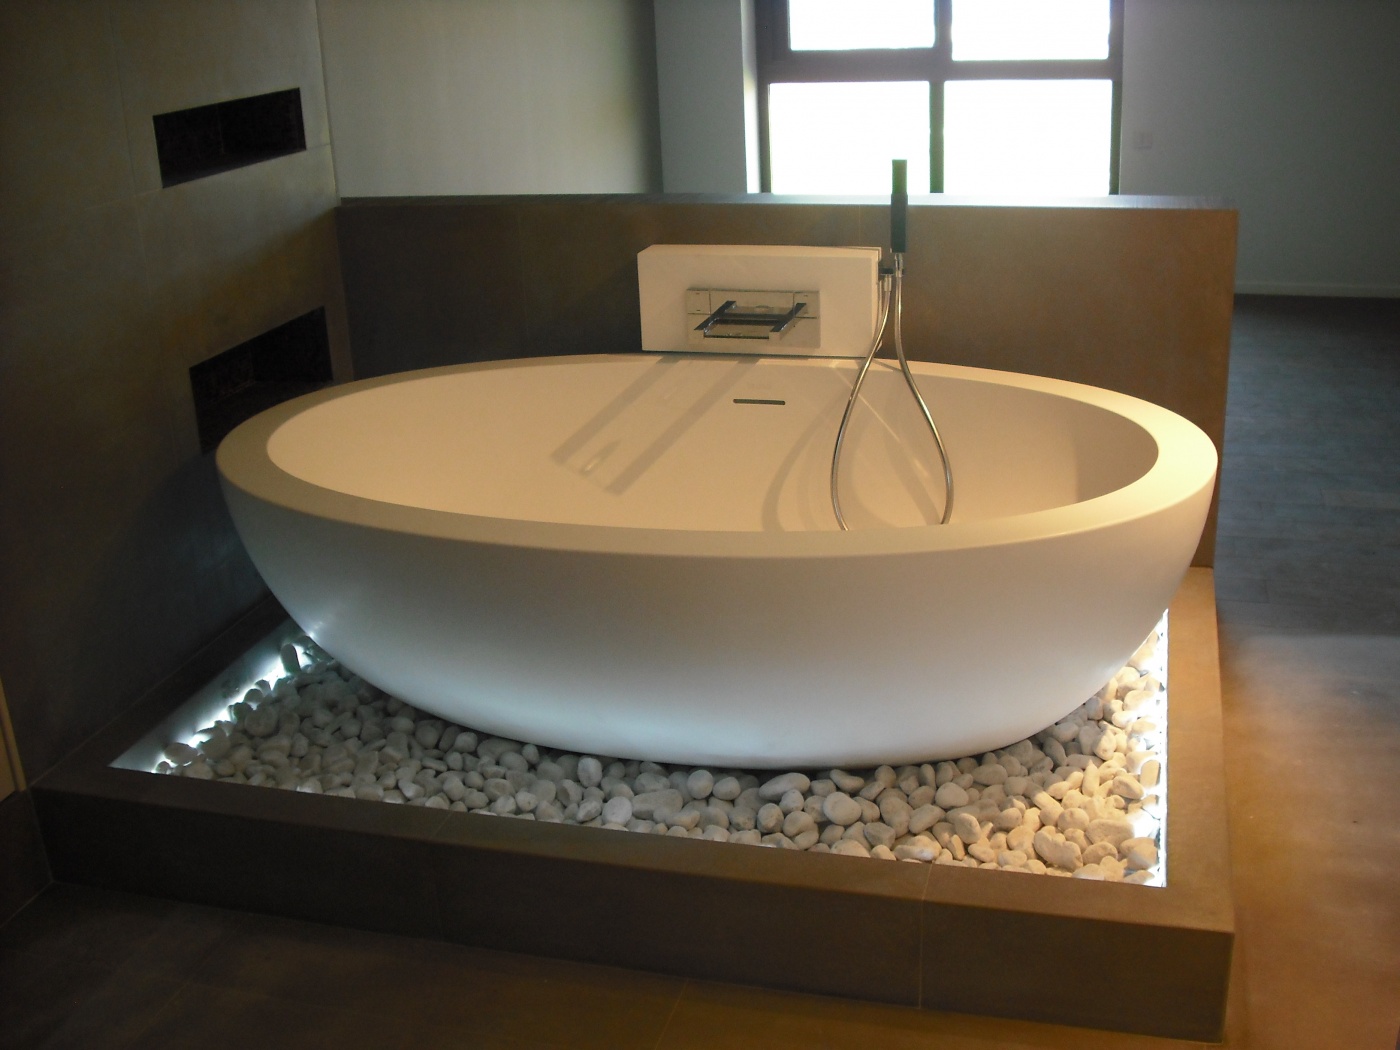 Ardun Salle de bain design en pierre Gris Barcelone
Baignoire Boffi